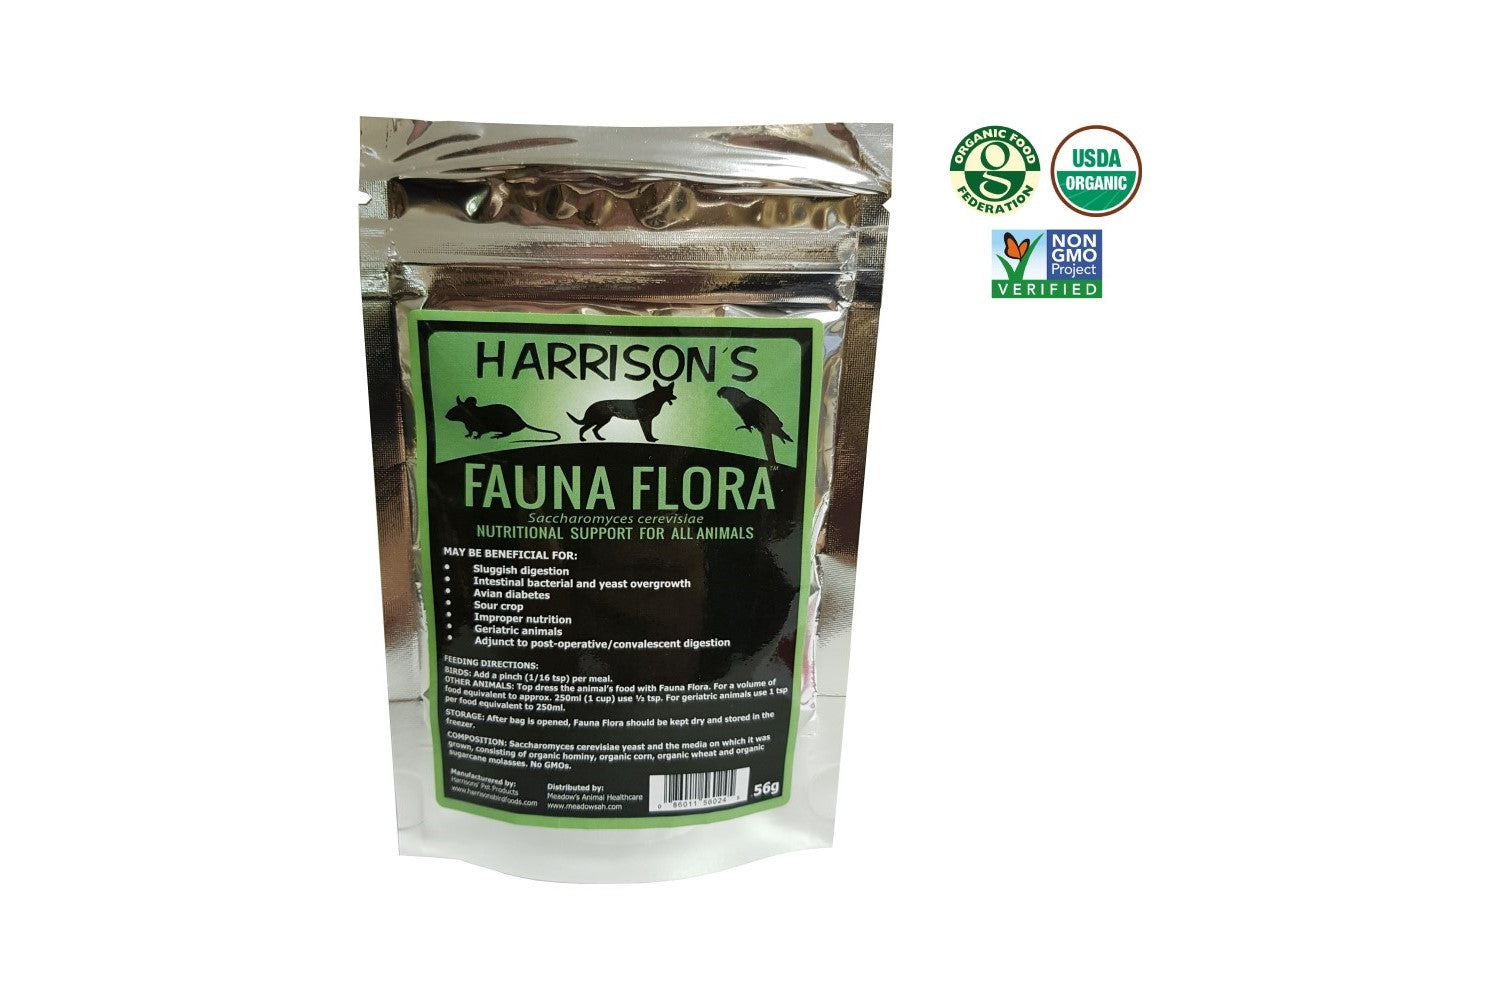 A bag of Harrison's Fauna Flora